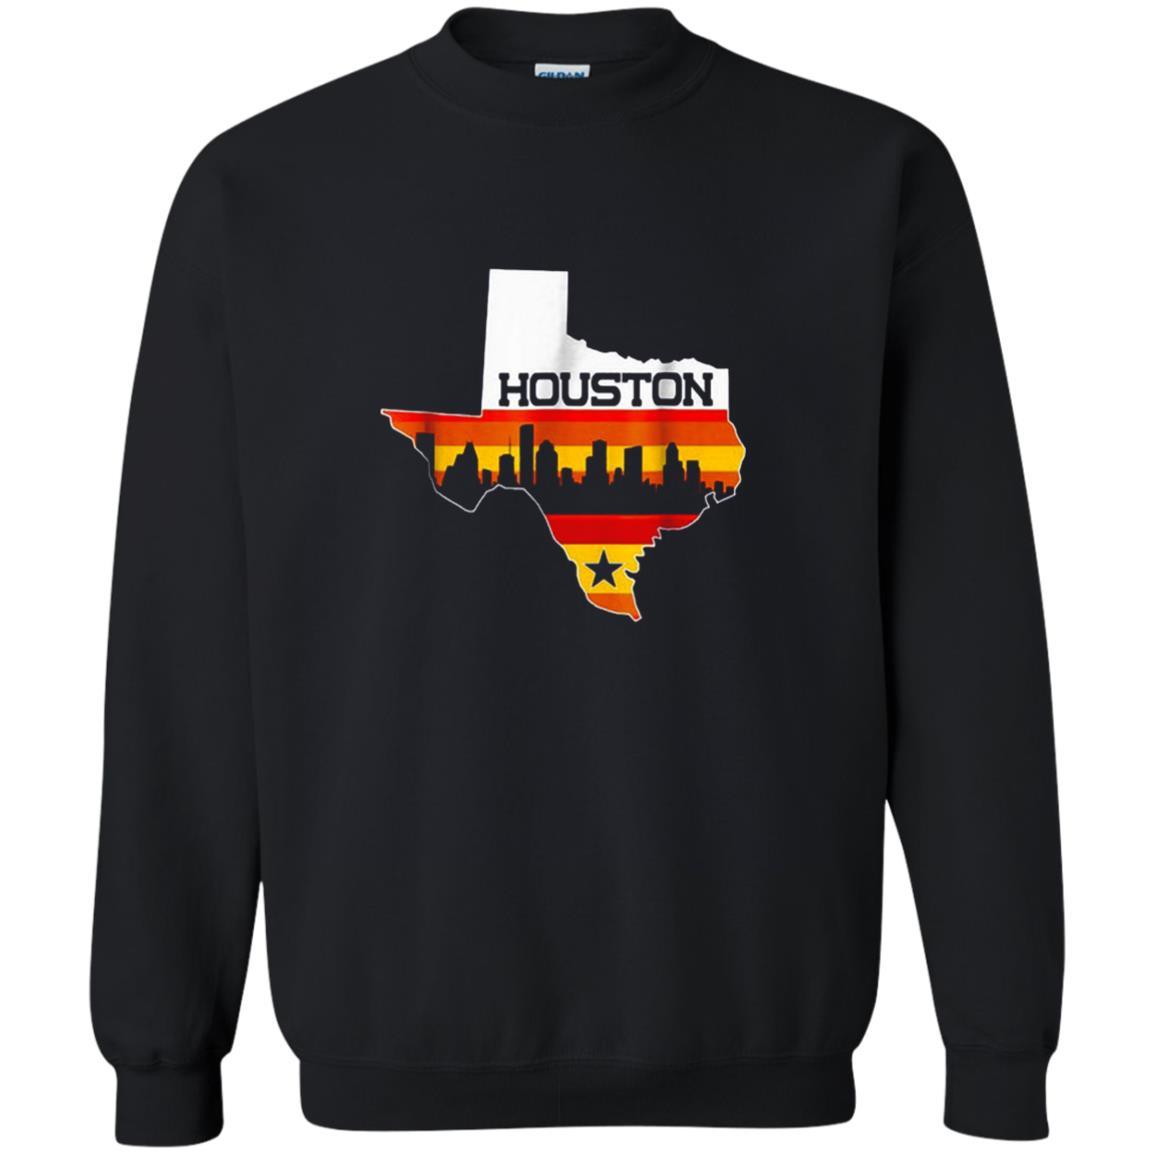 Houston City In Texas Shirts